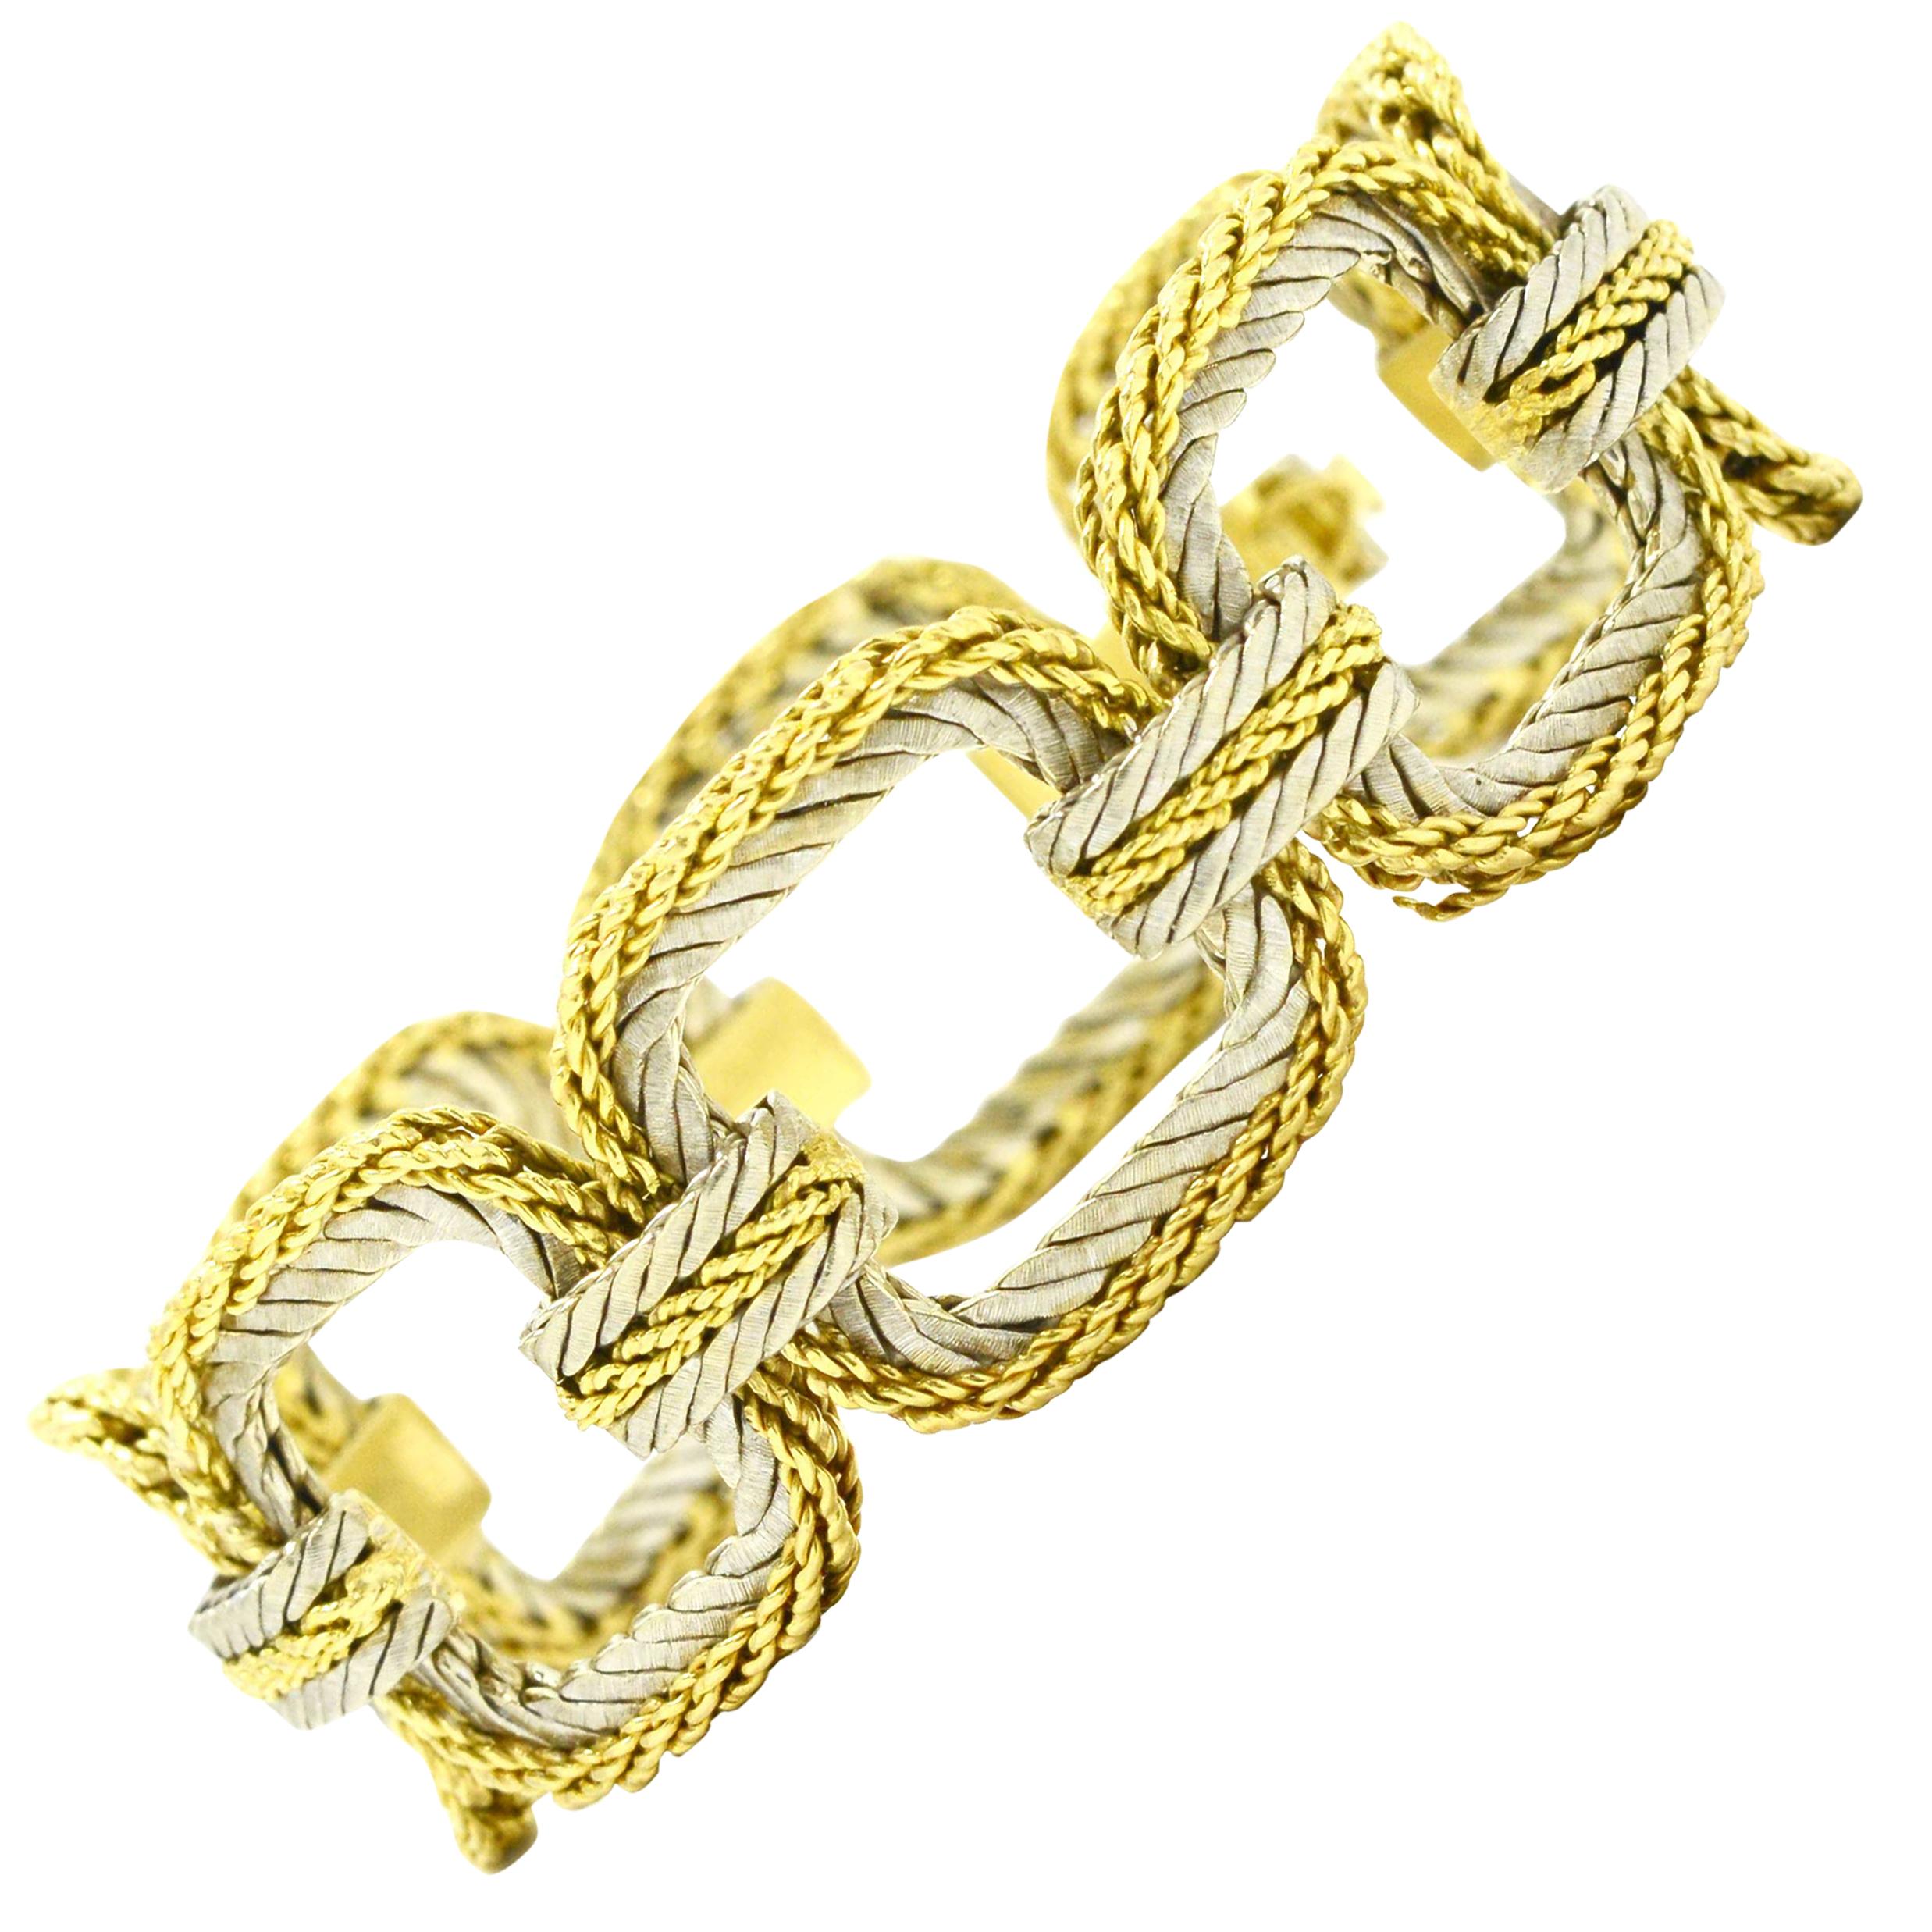 Vintage Buccellati Woven Link Bracelet Wide 2 Tone Square Braided 18kt Gold